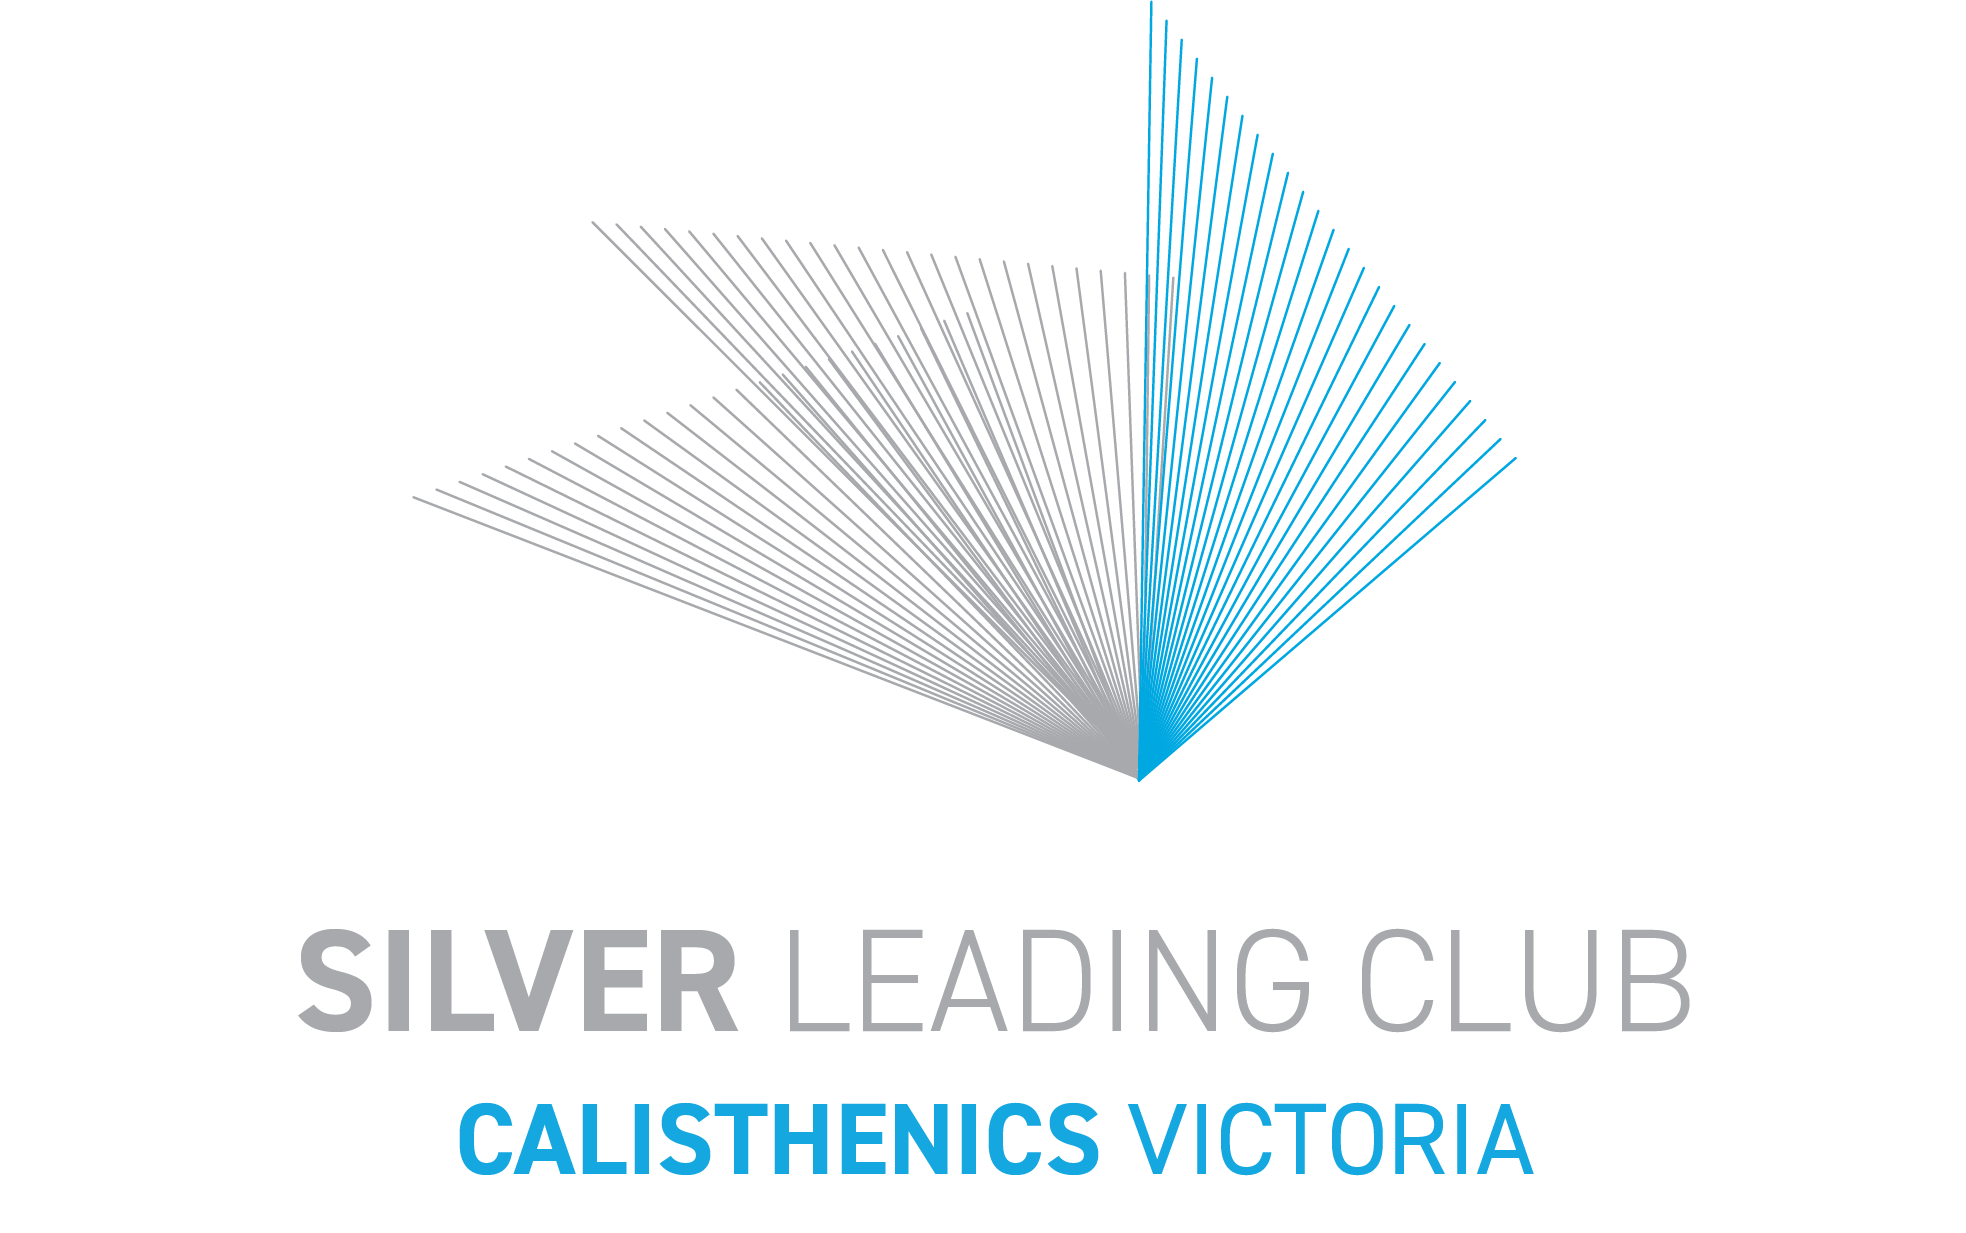 Newport CC is a Calisthenics Victoria Silver Leading Club